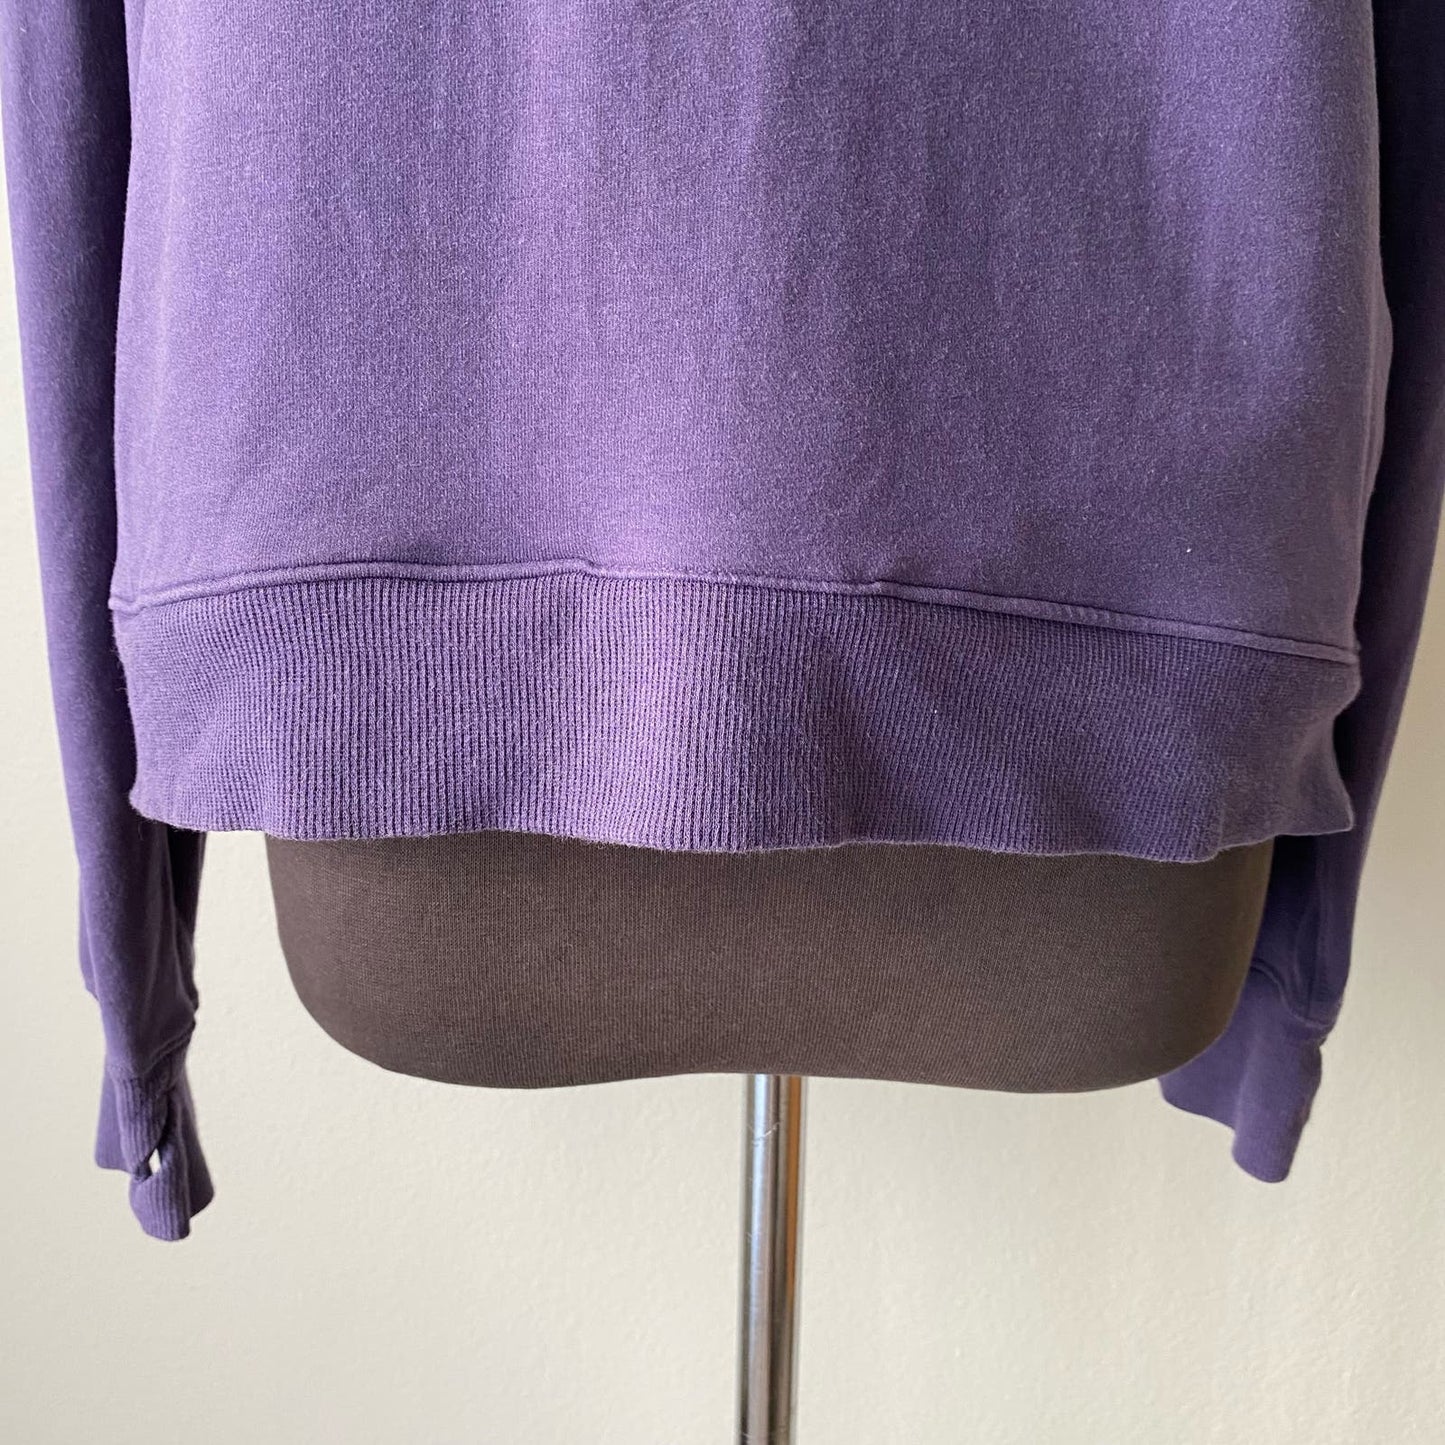 All In Motion sz M crew neck cozy purple sweatshirt